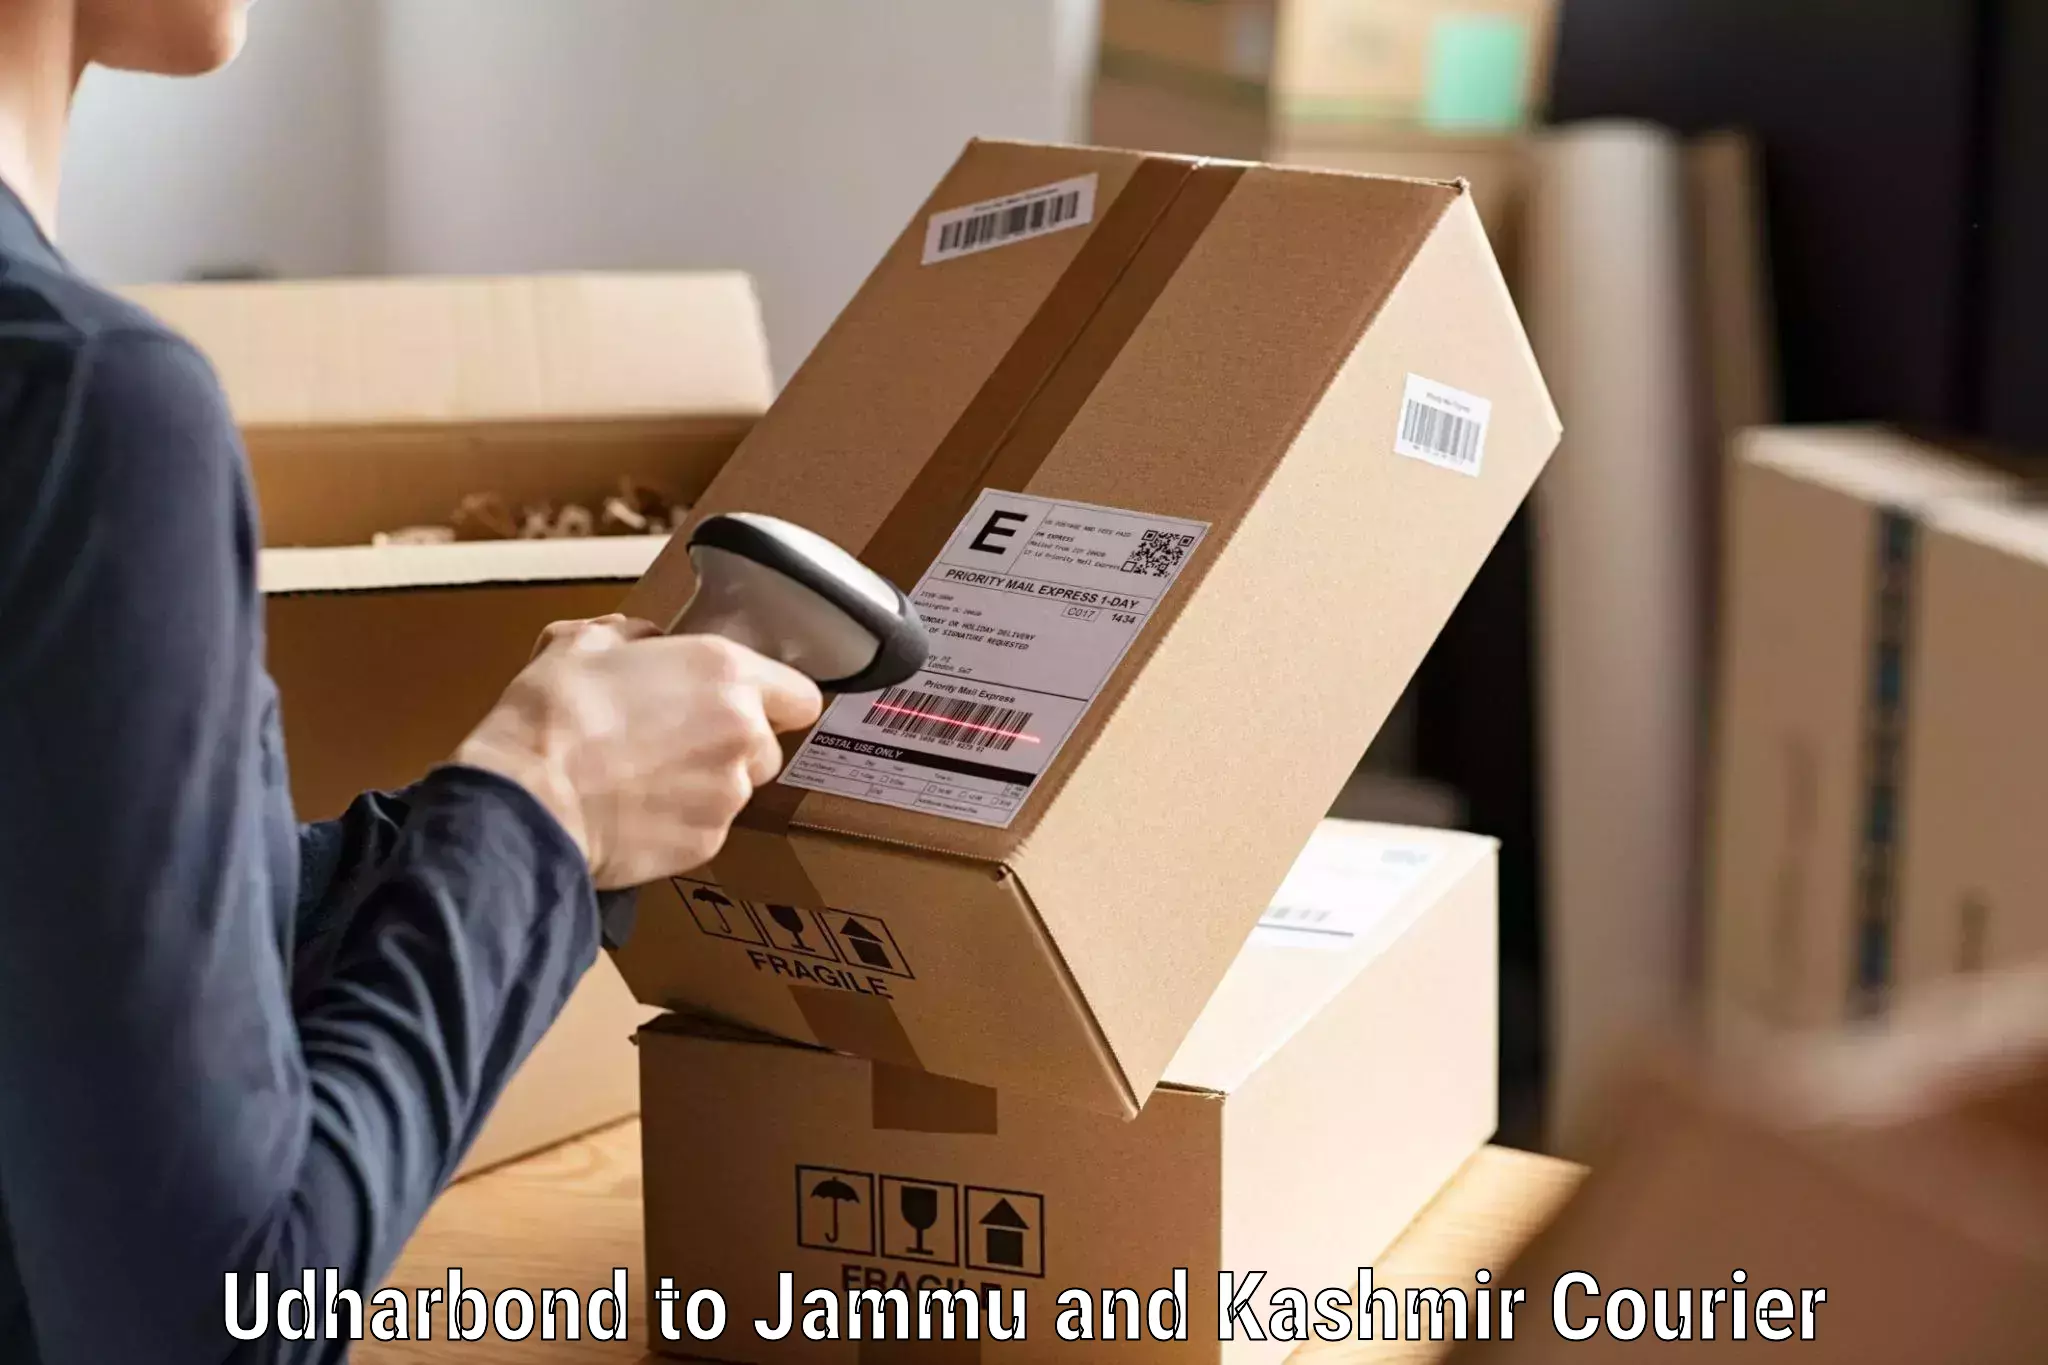 Courier service efficiency in Udharbond to Jammu